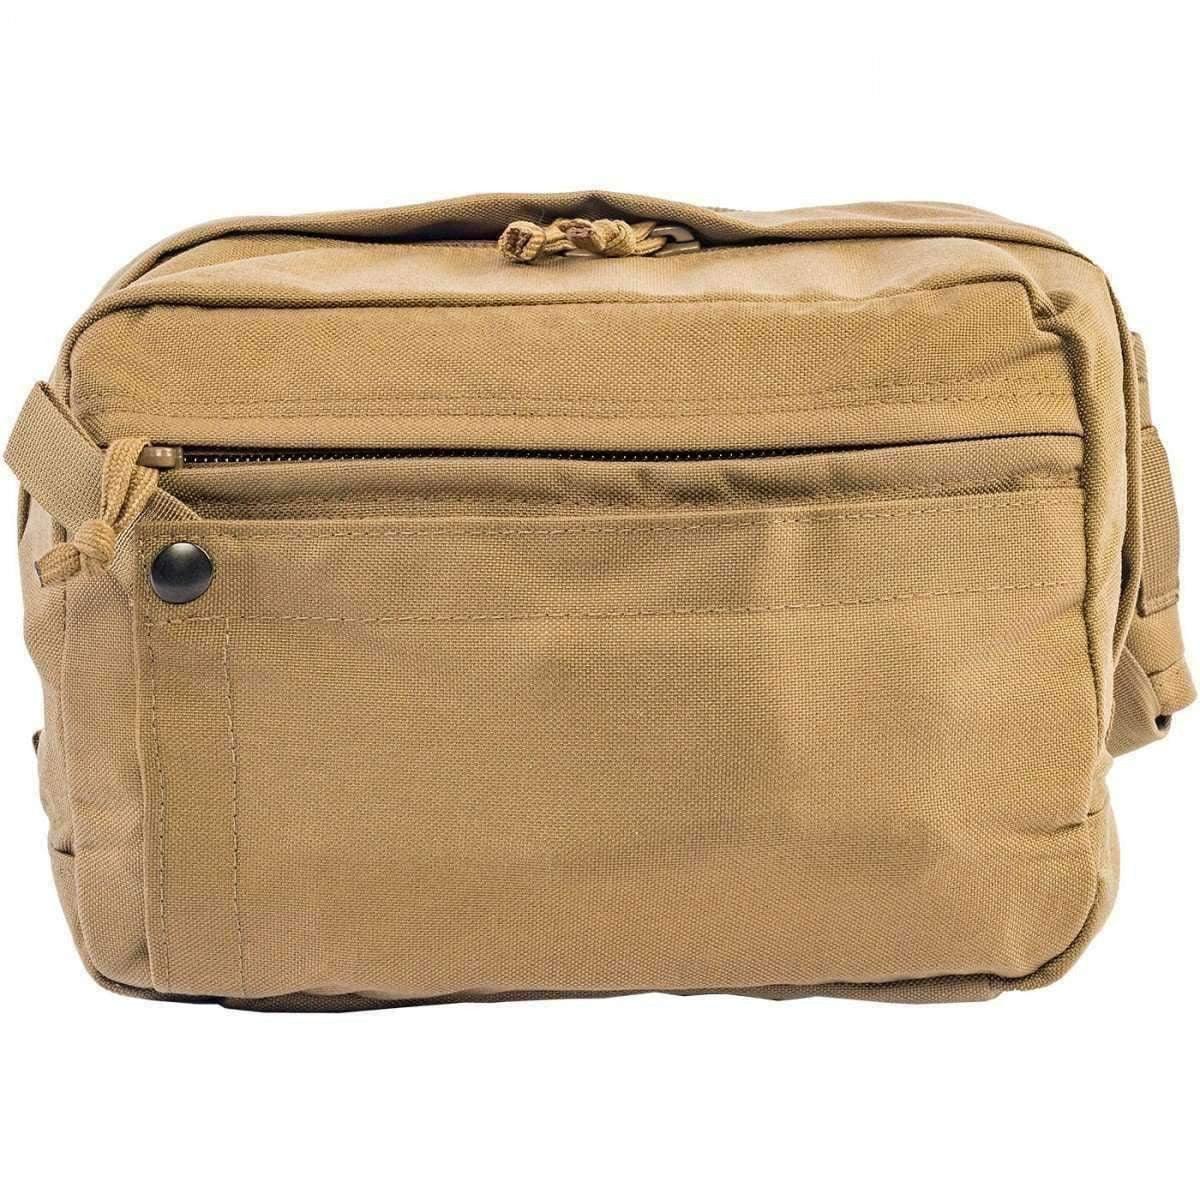 USMC CLS Bag - Vendor